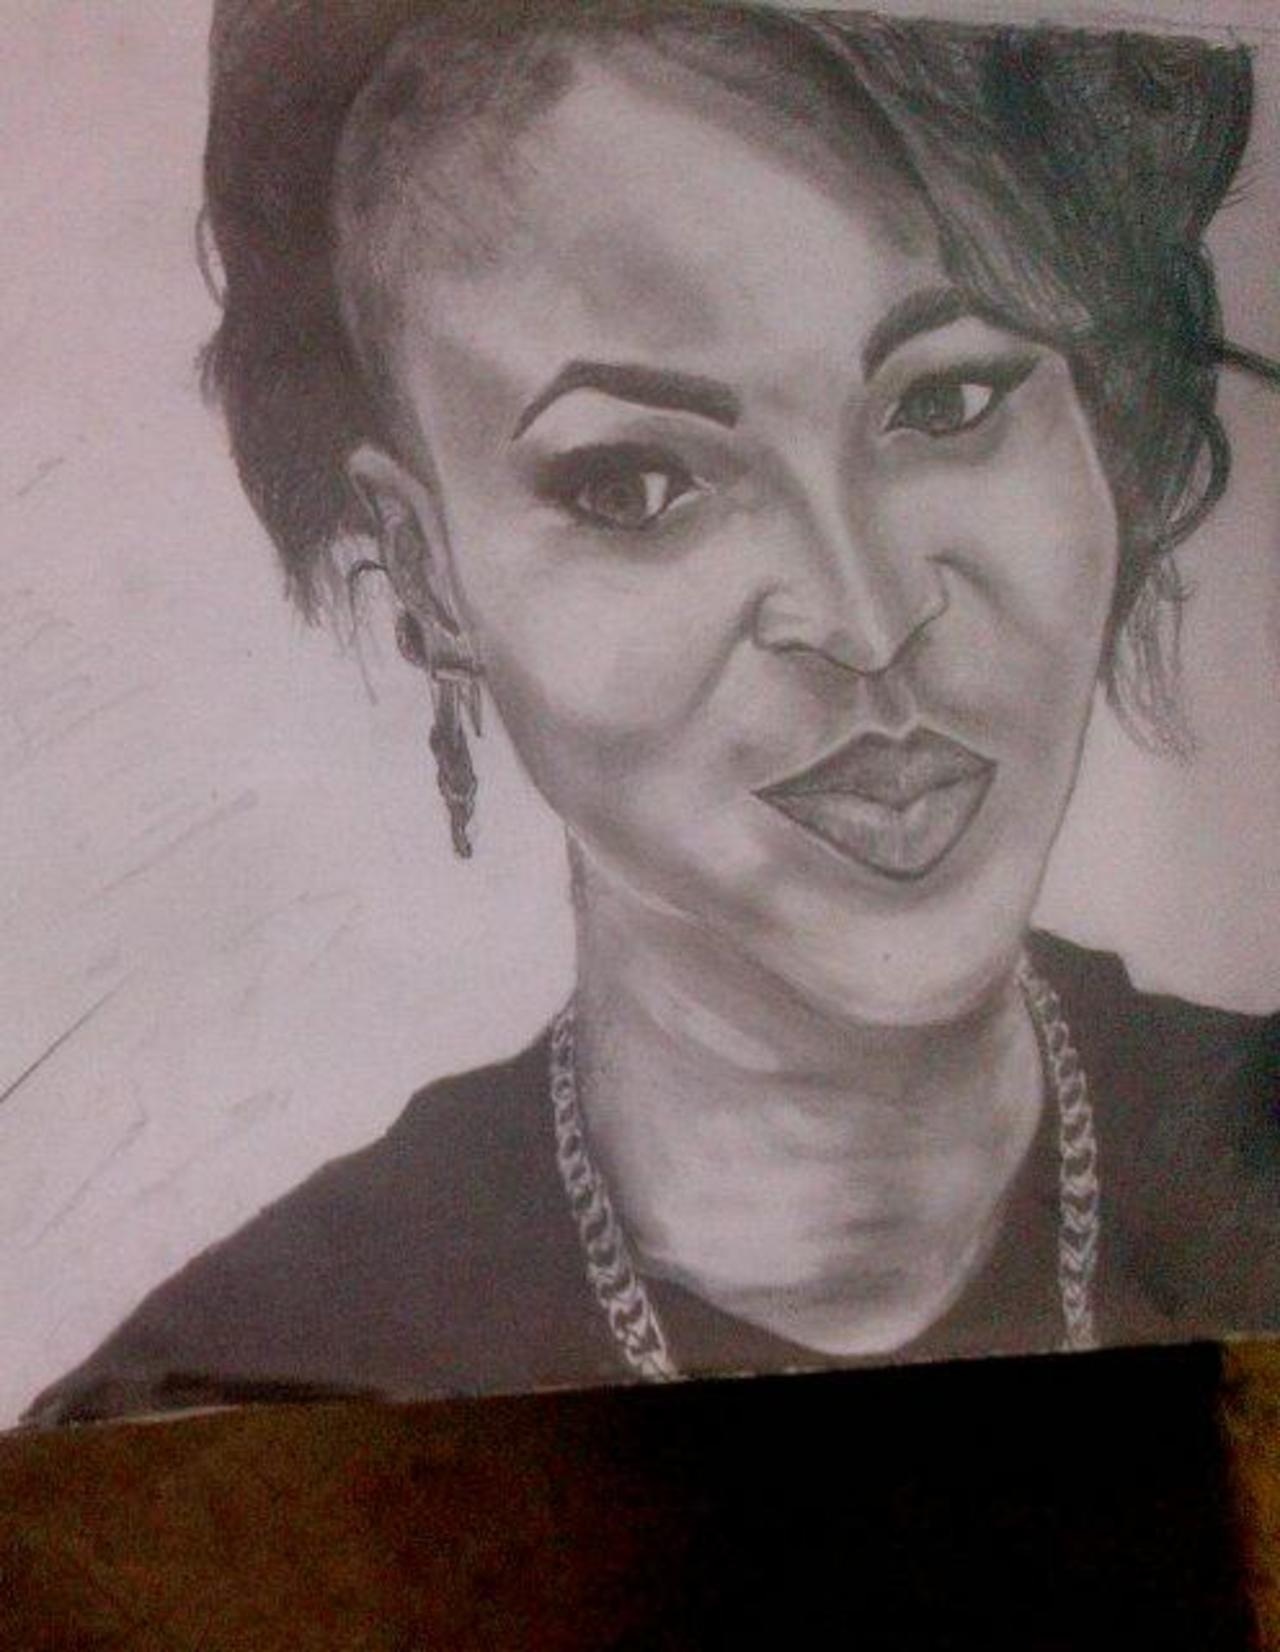 #art #artbyokiibrahim  pencil portrait of @EvaAlordiah #RT  if you like the work tnks! :) http://t.co/baqG9598KM